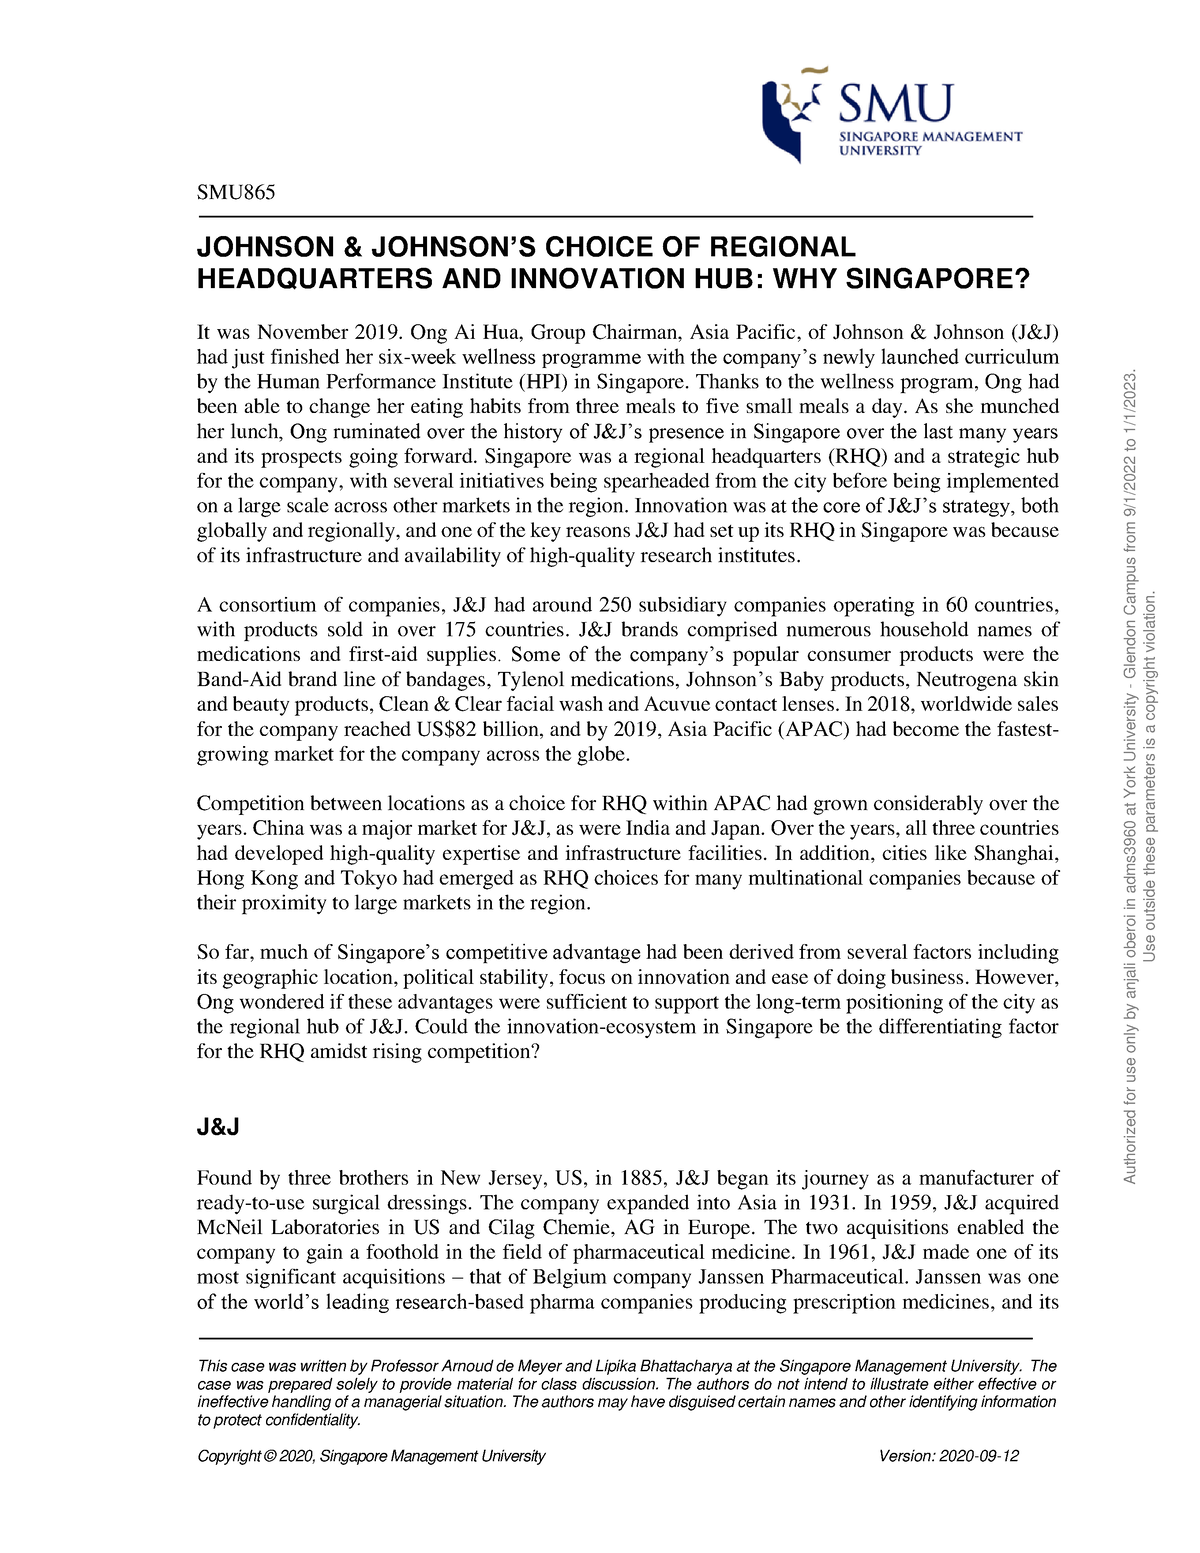 Johnson and Johnson Case SMU JOHNSON & JOHNSON’S CHOICE OF REGIONAL